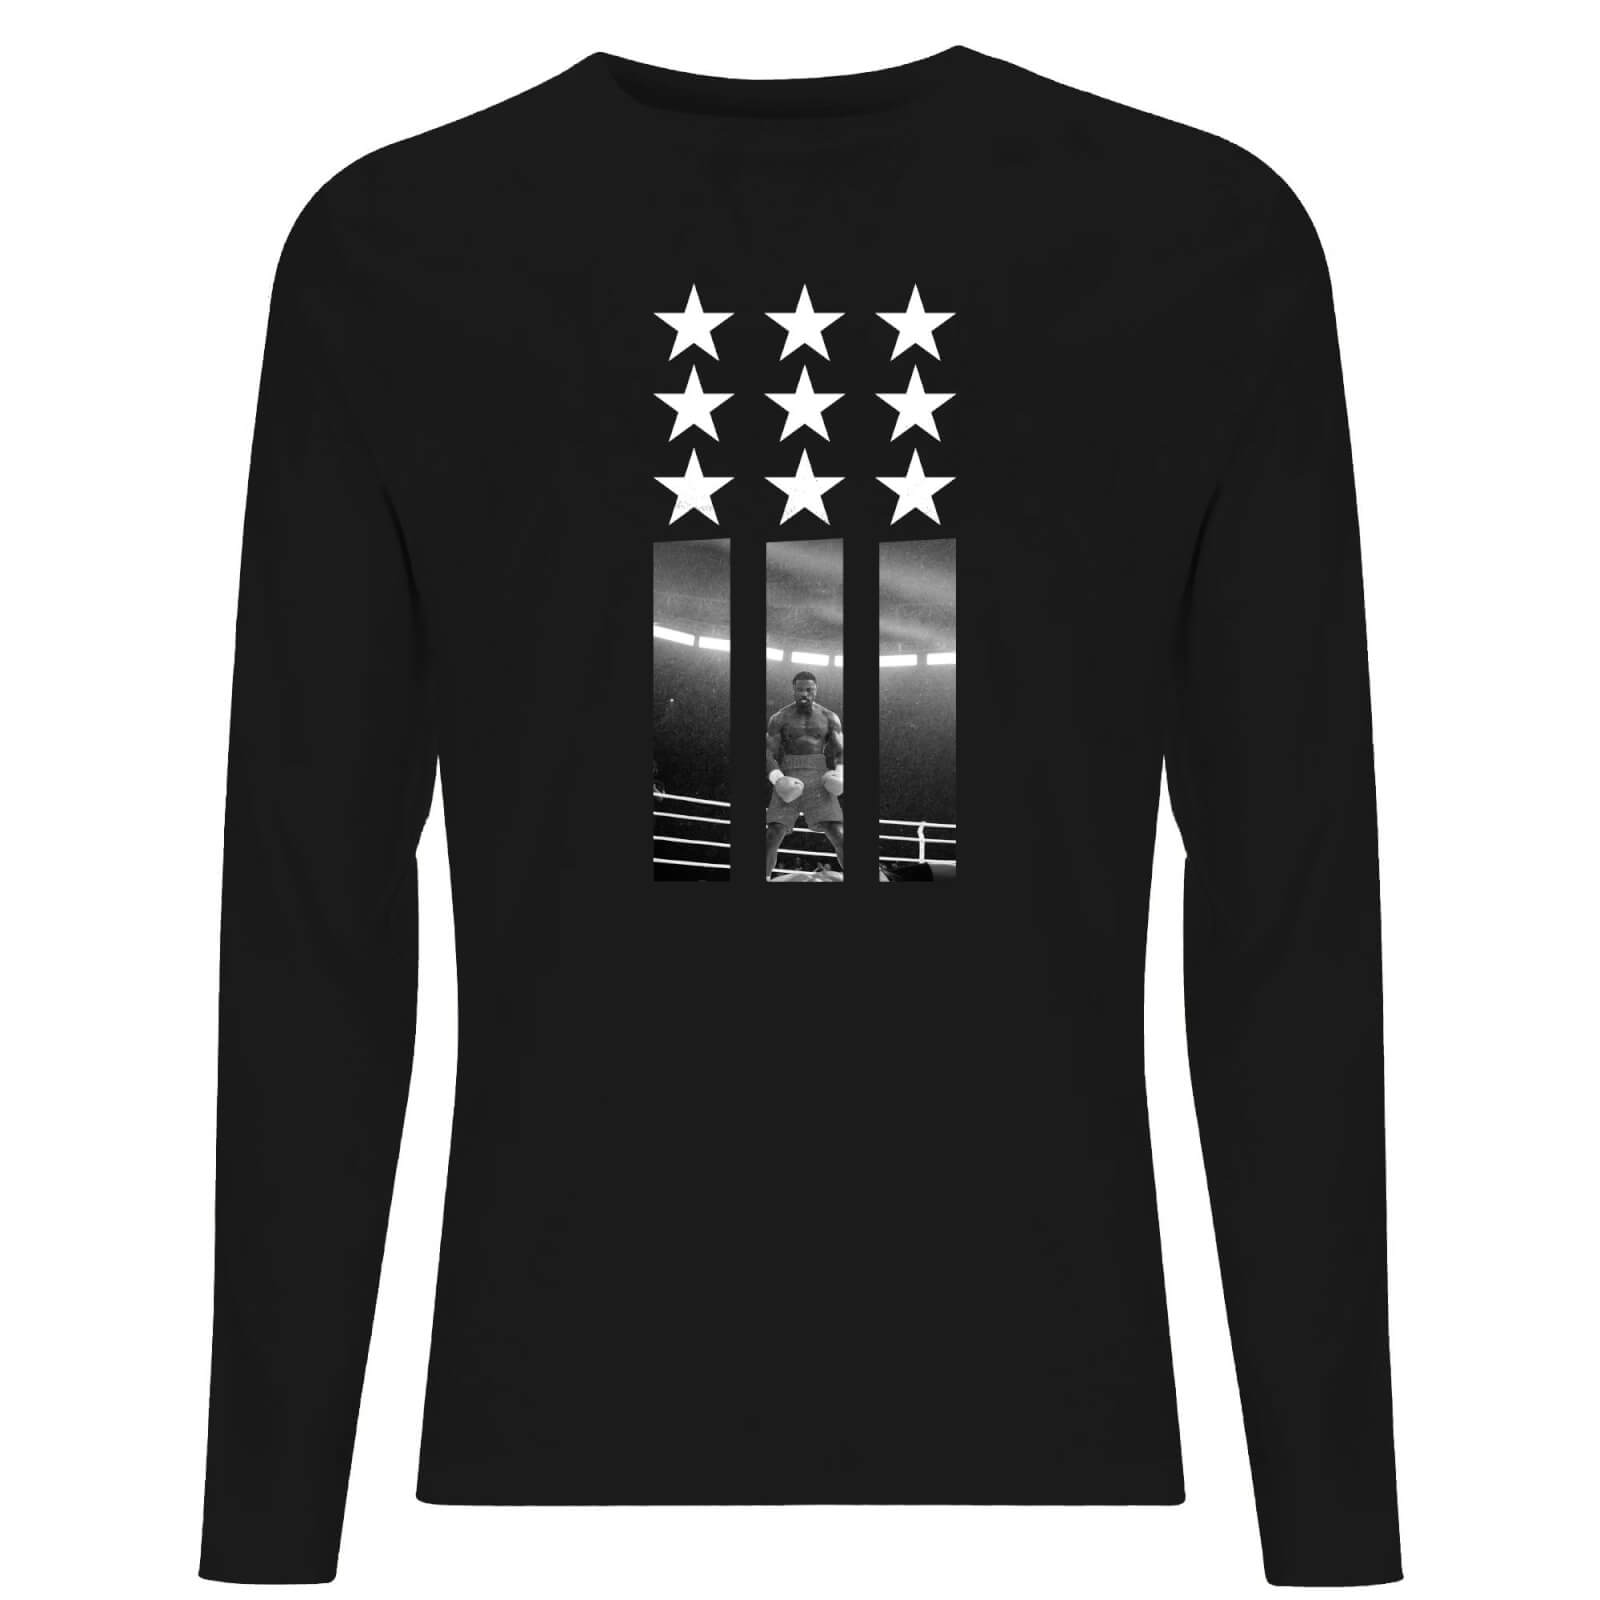 Creed Poster Stars Men's Long Sleeve T-Shirt - Black - XL